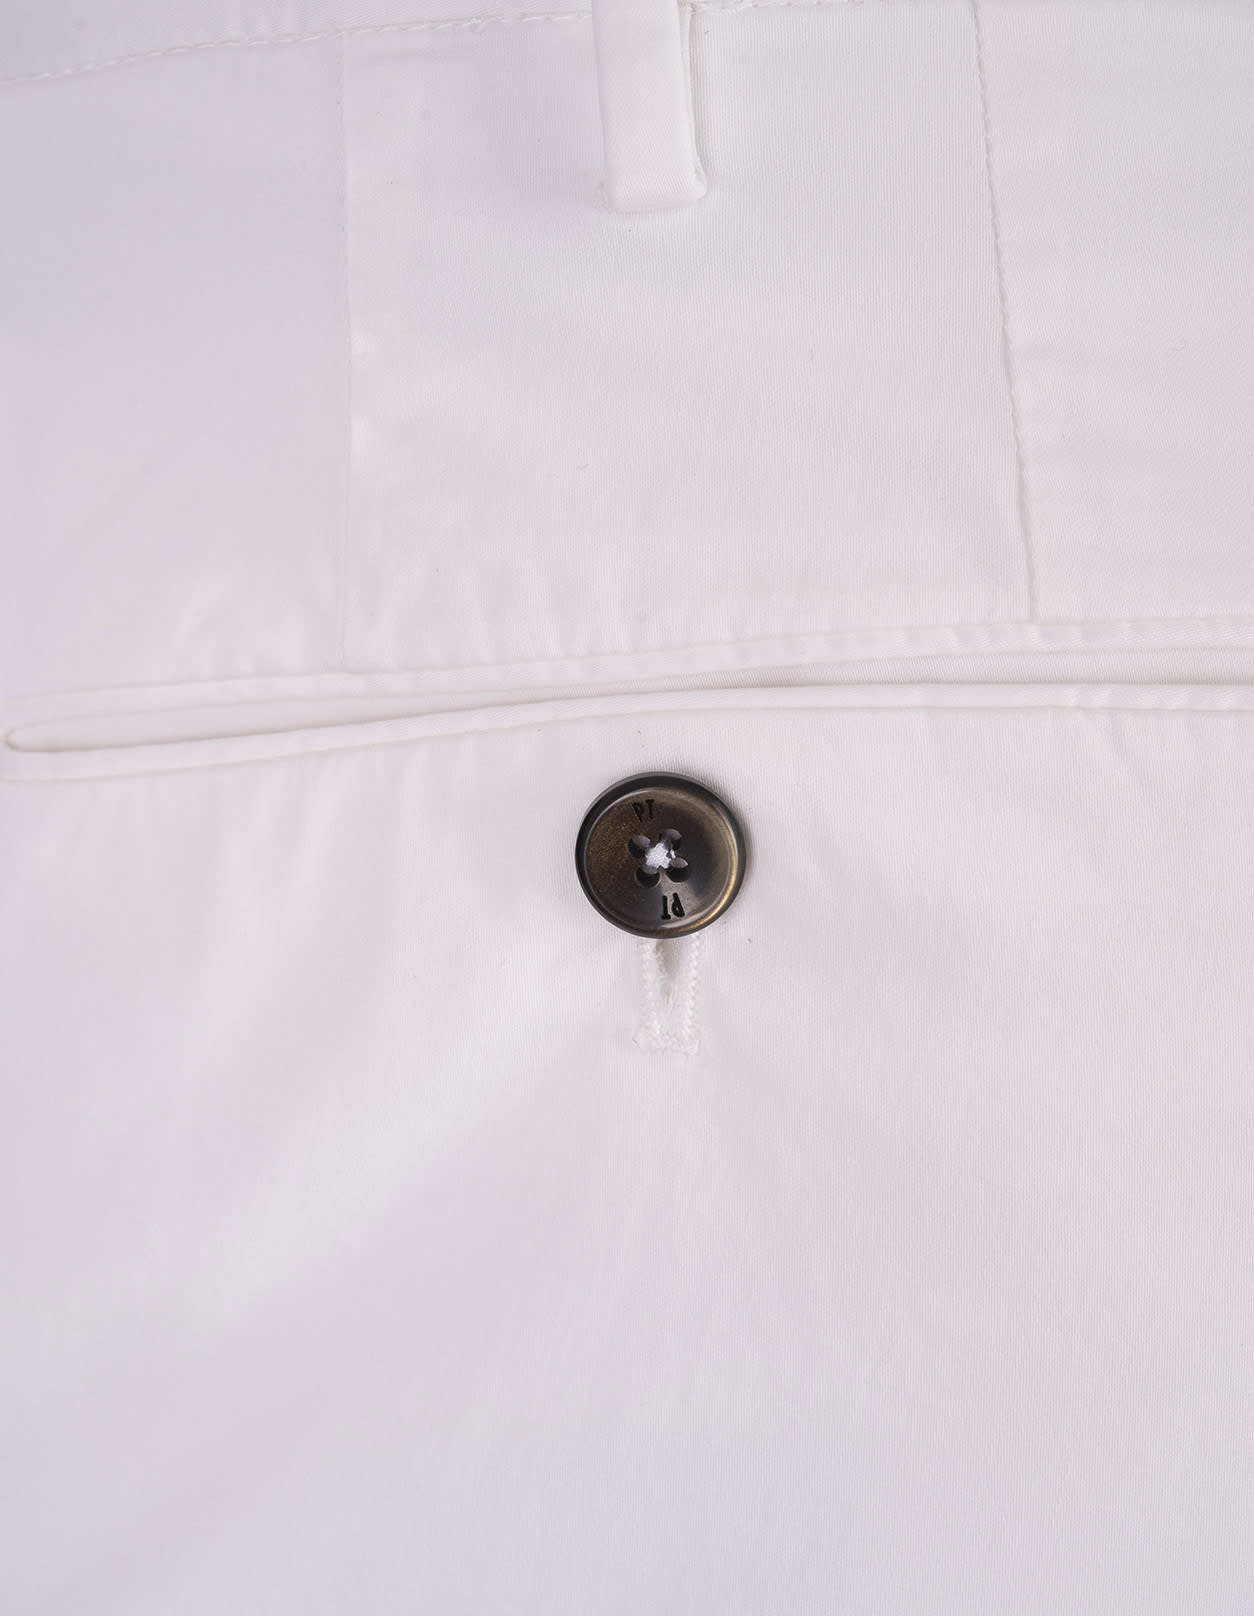 Shop Pt01 White Stretch Cotton Classic Trousers